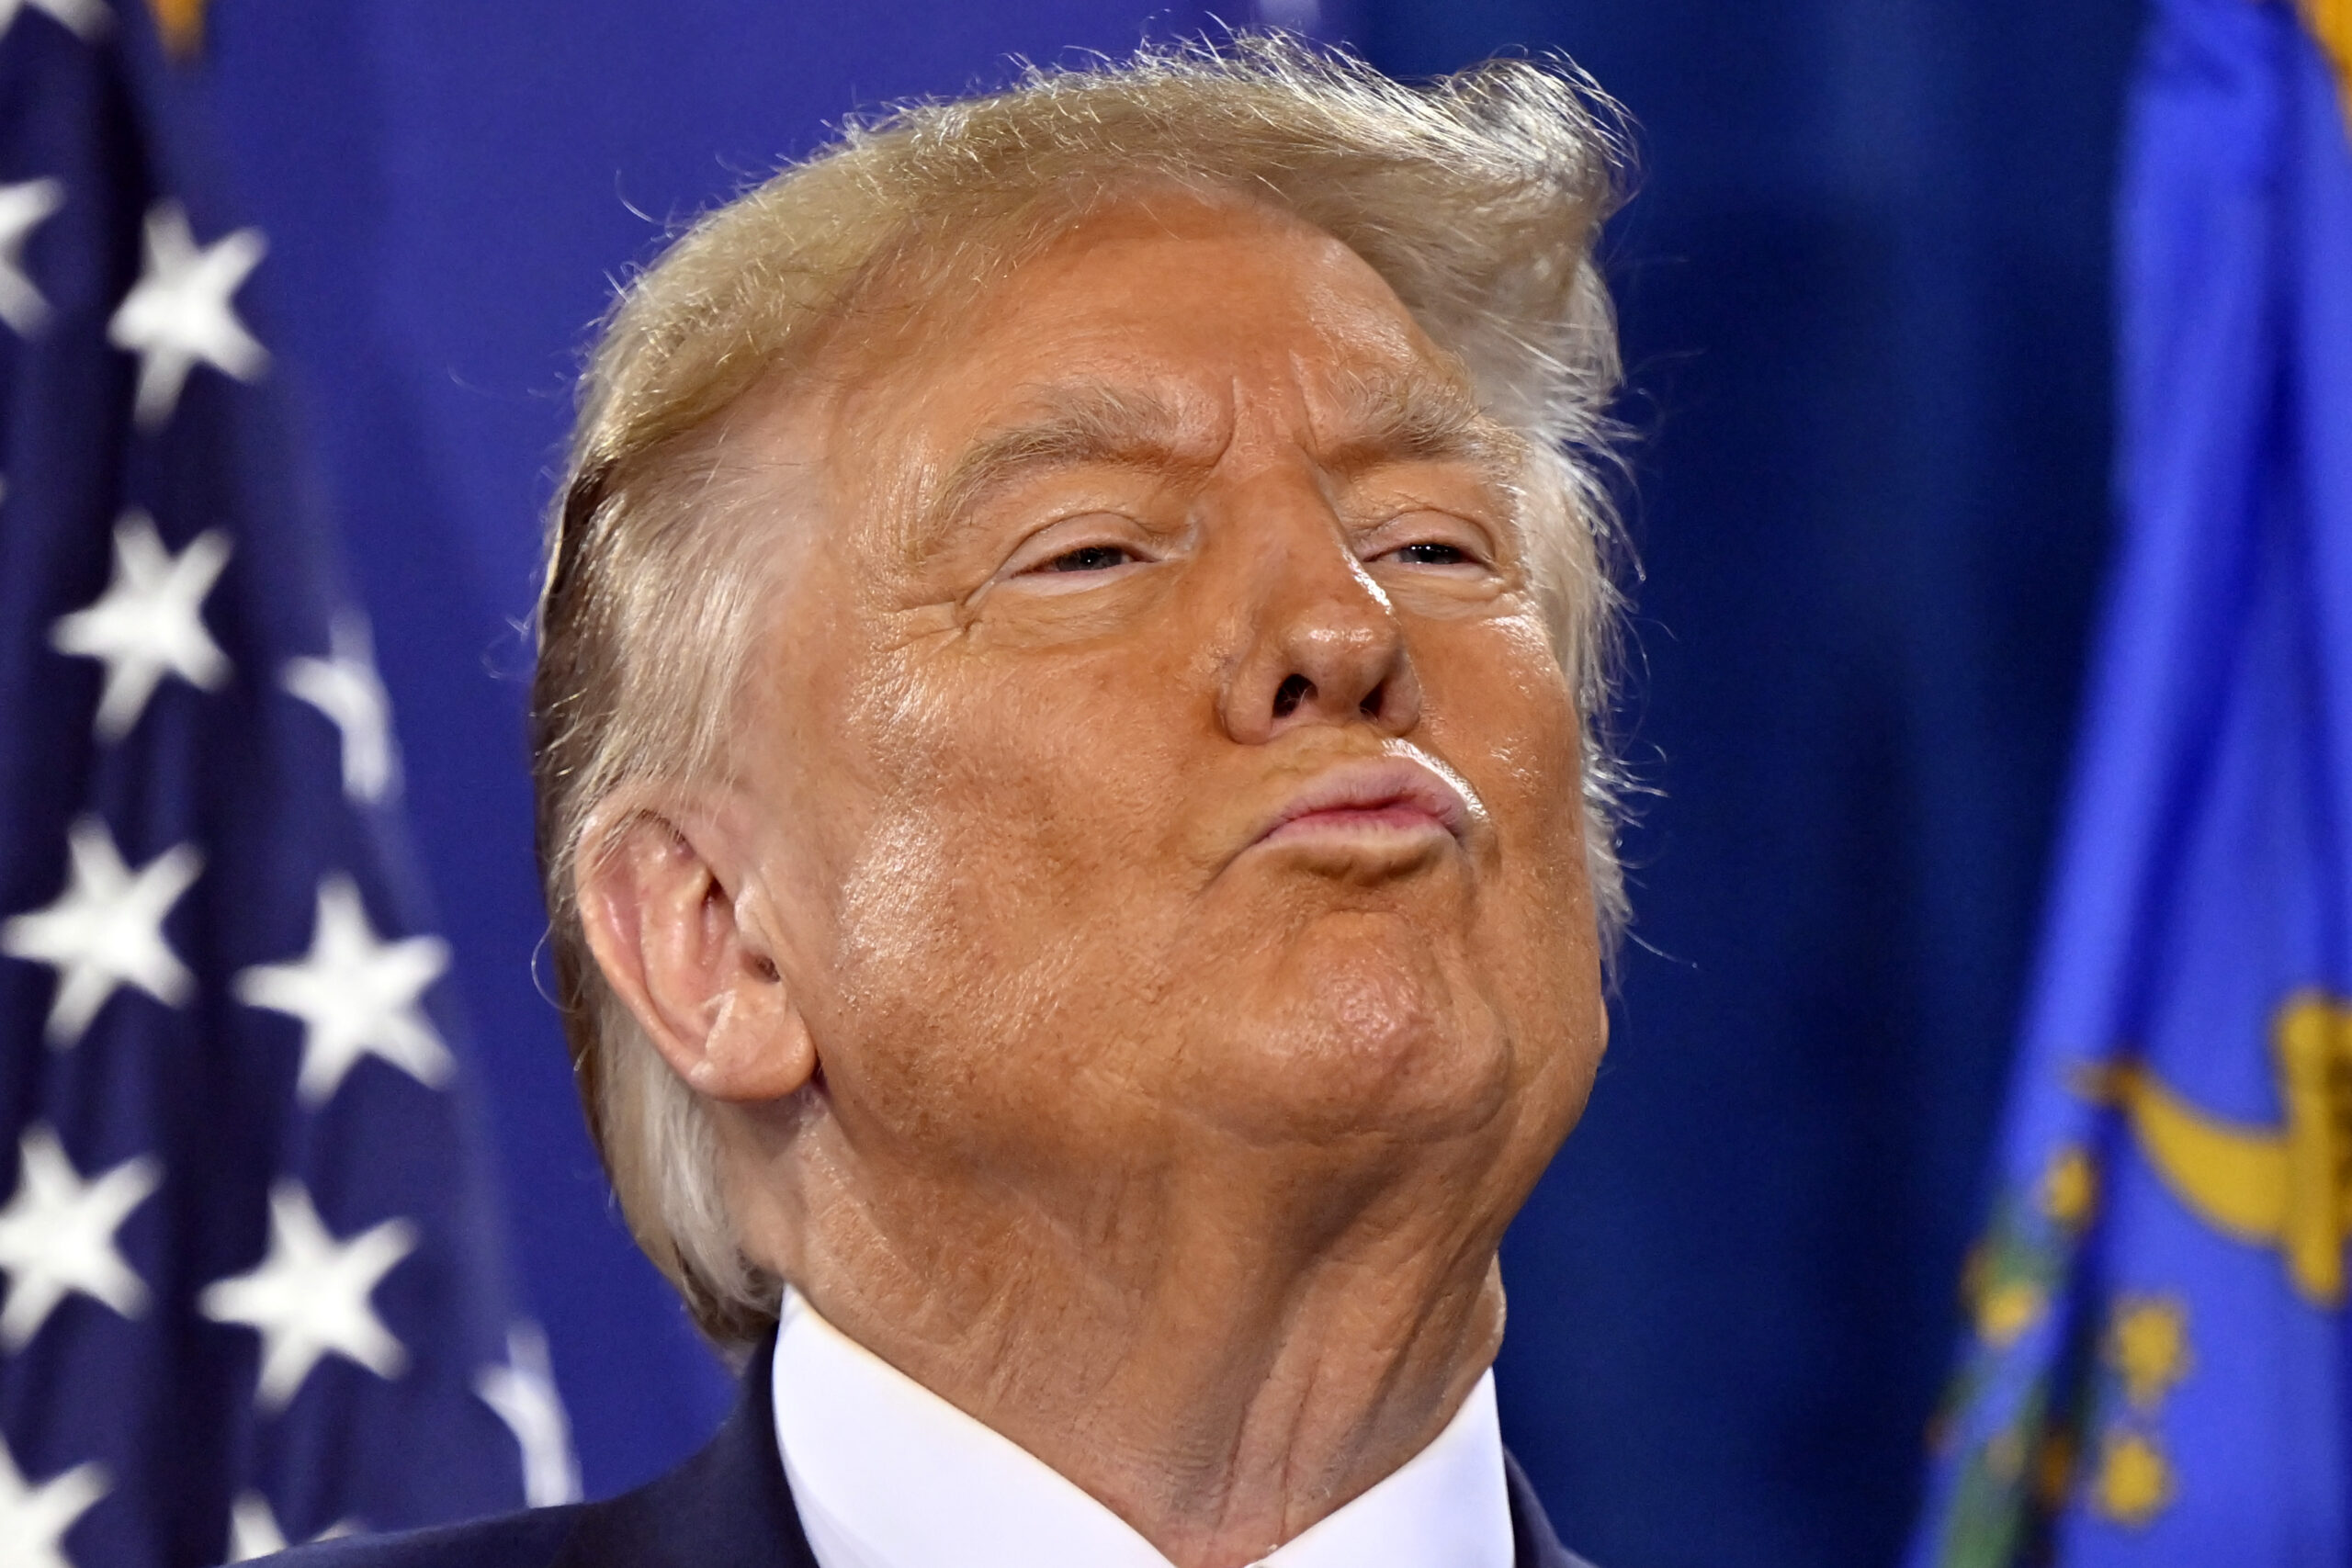 Trump kiss face